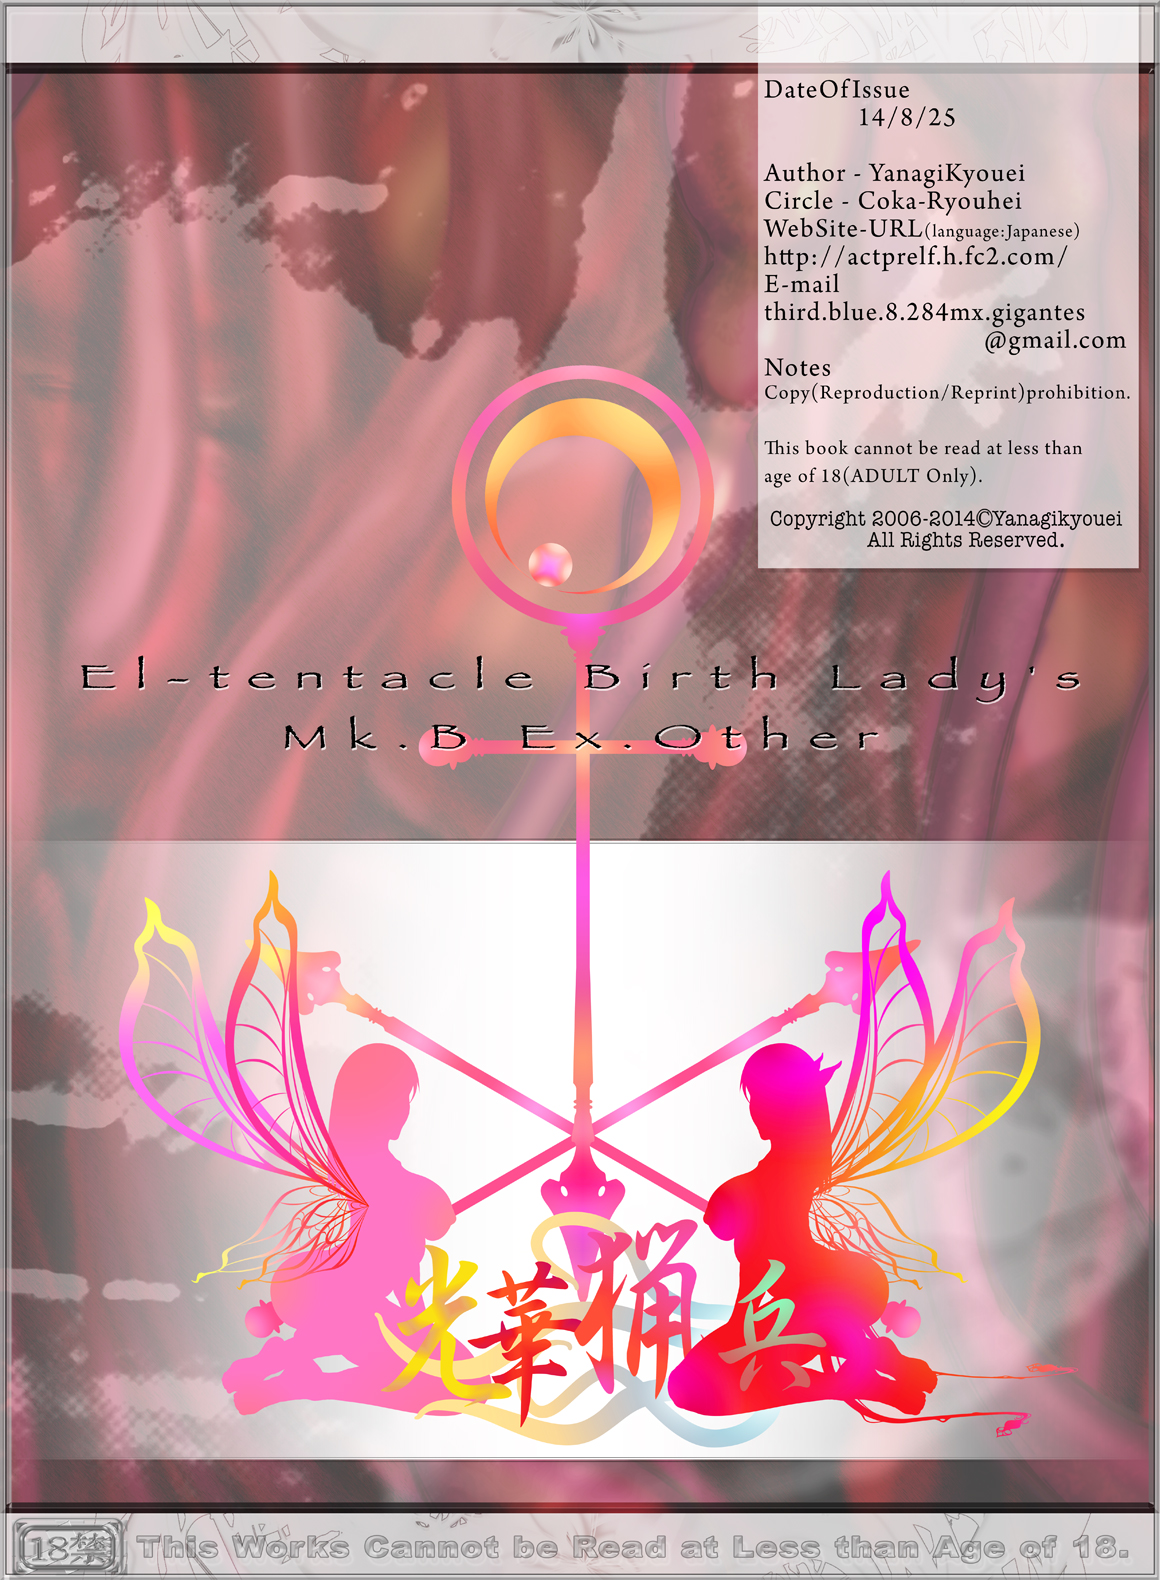 [光華猟兵 (梁魏僑叡)] El-tentacle Birth Lady’s Mk.B ex.other [DL版]